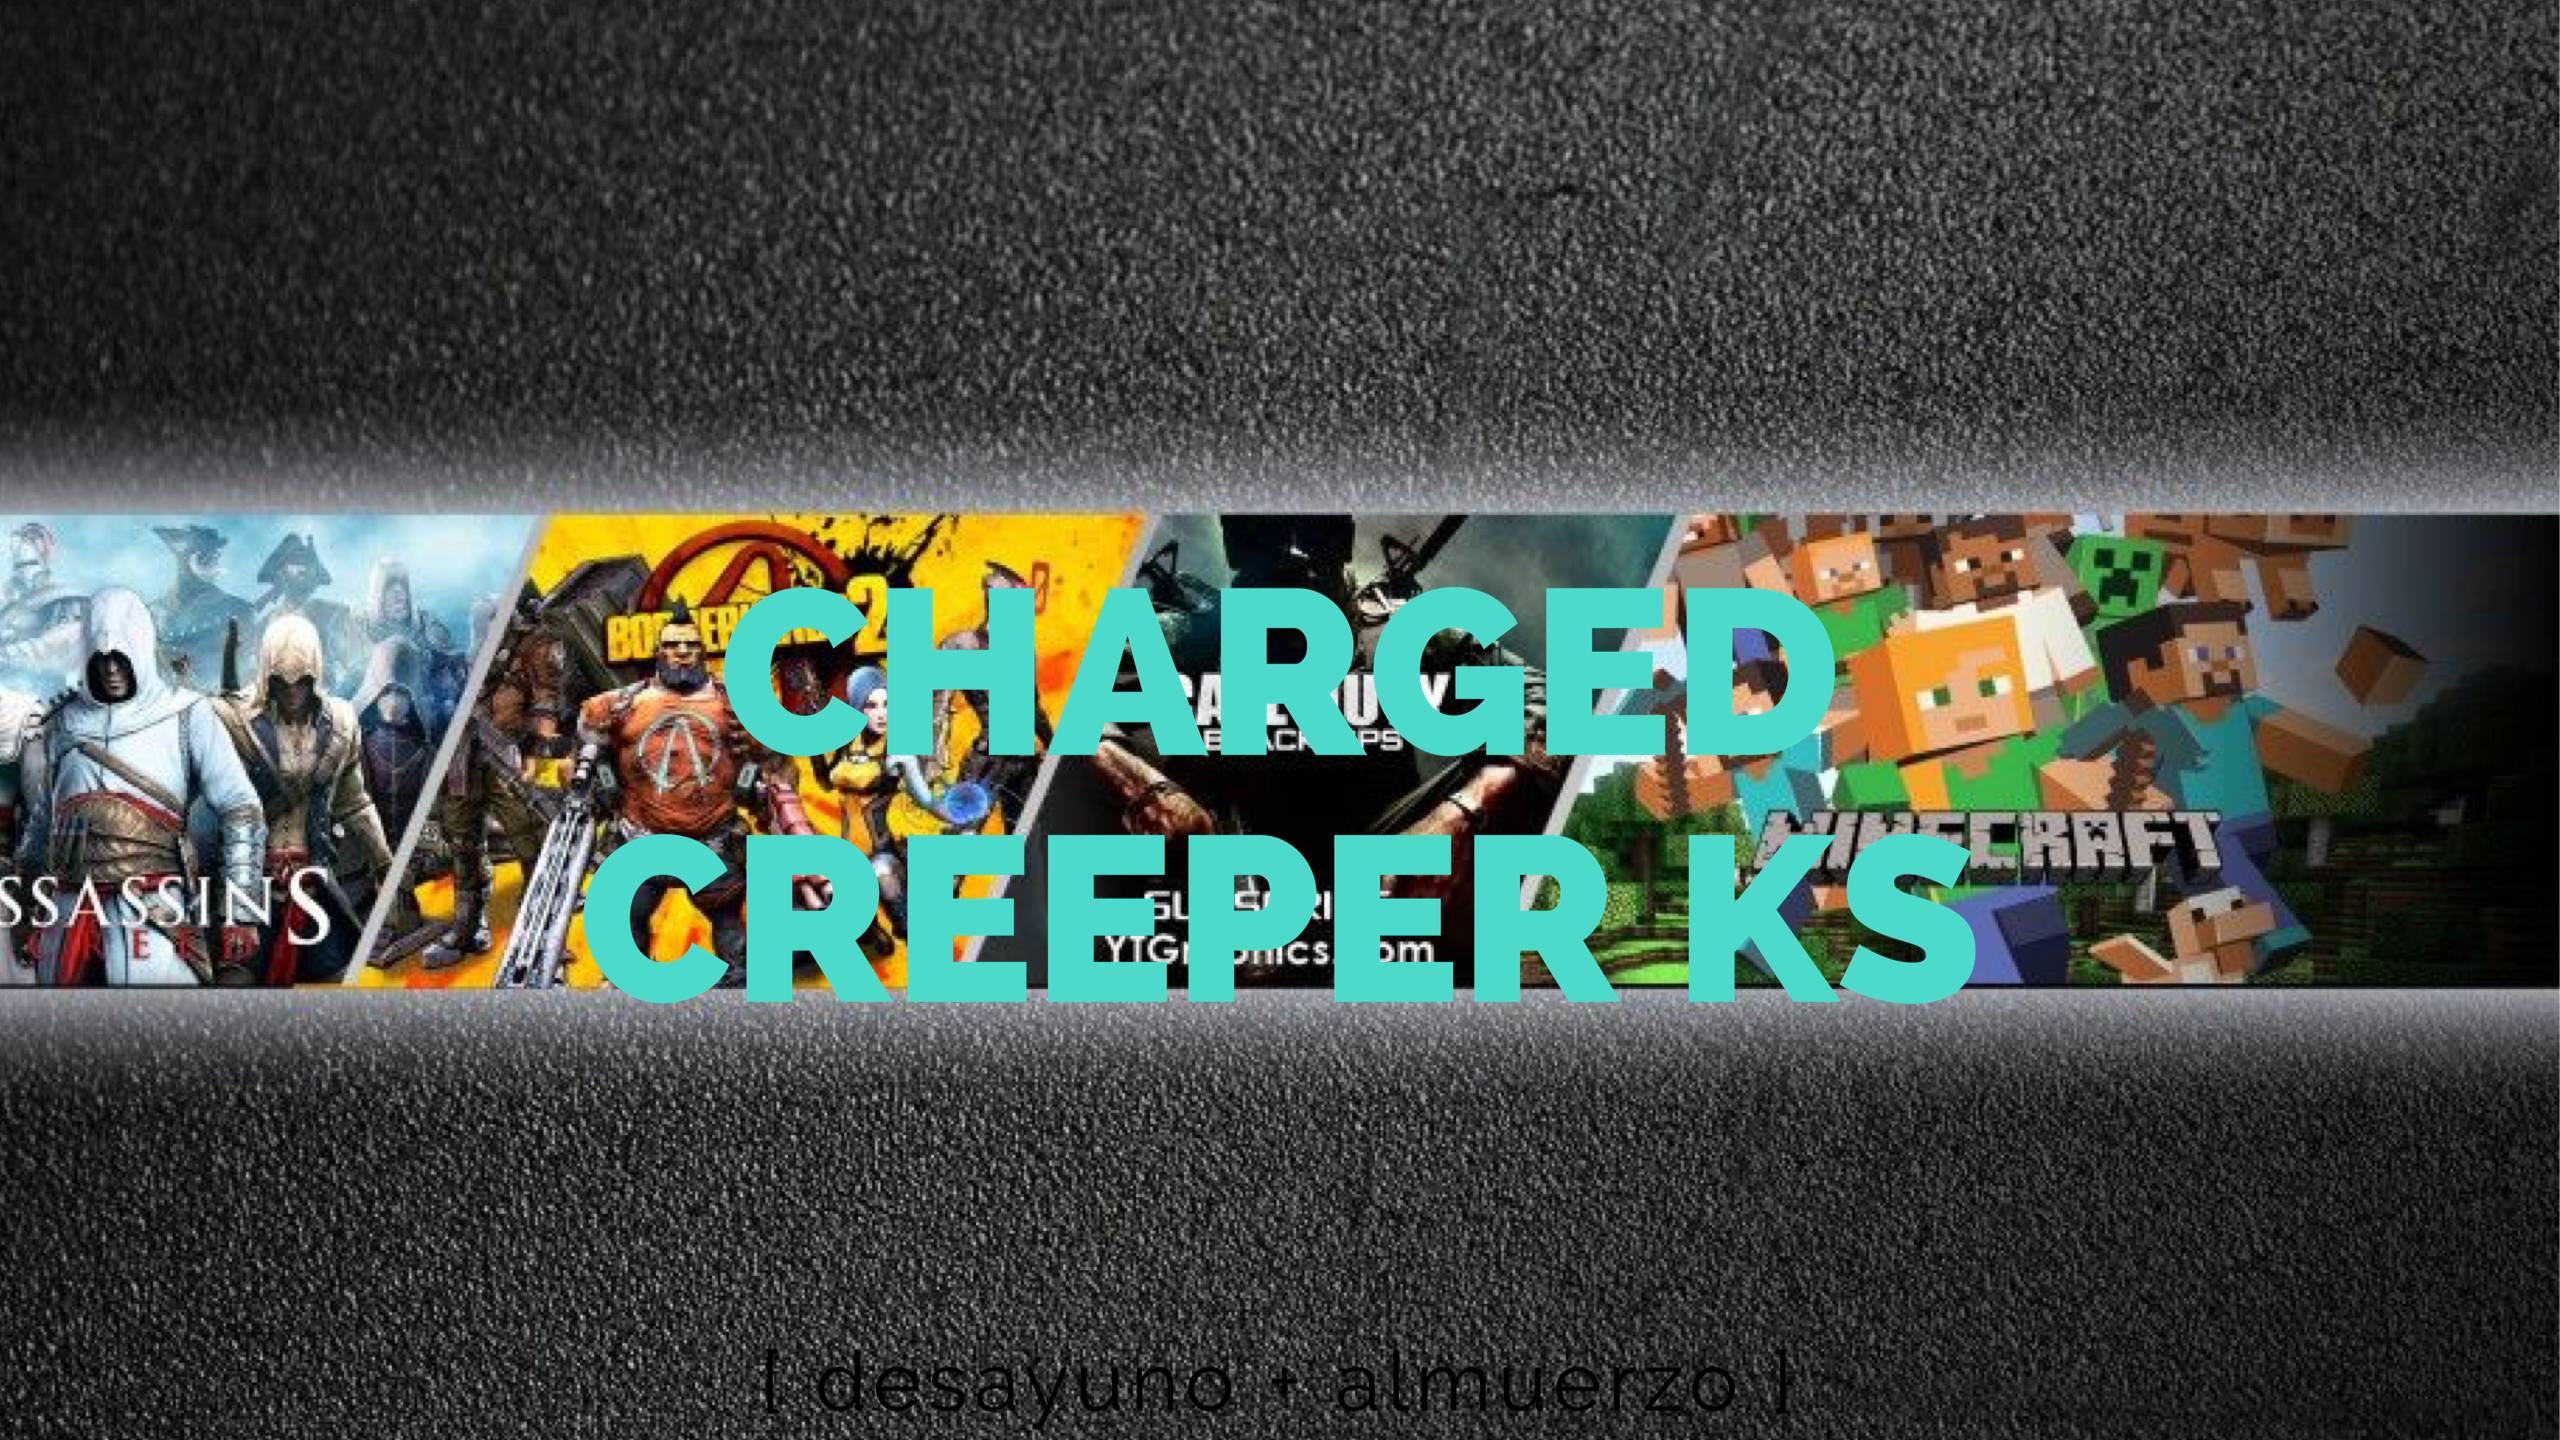 Charged Creeperks